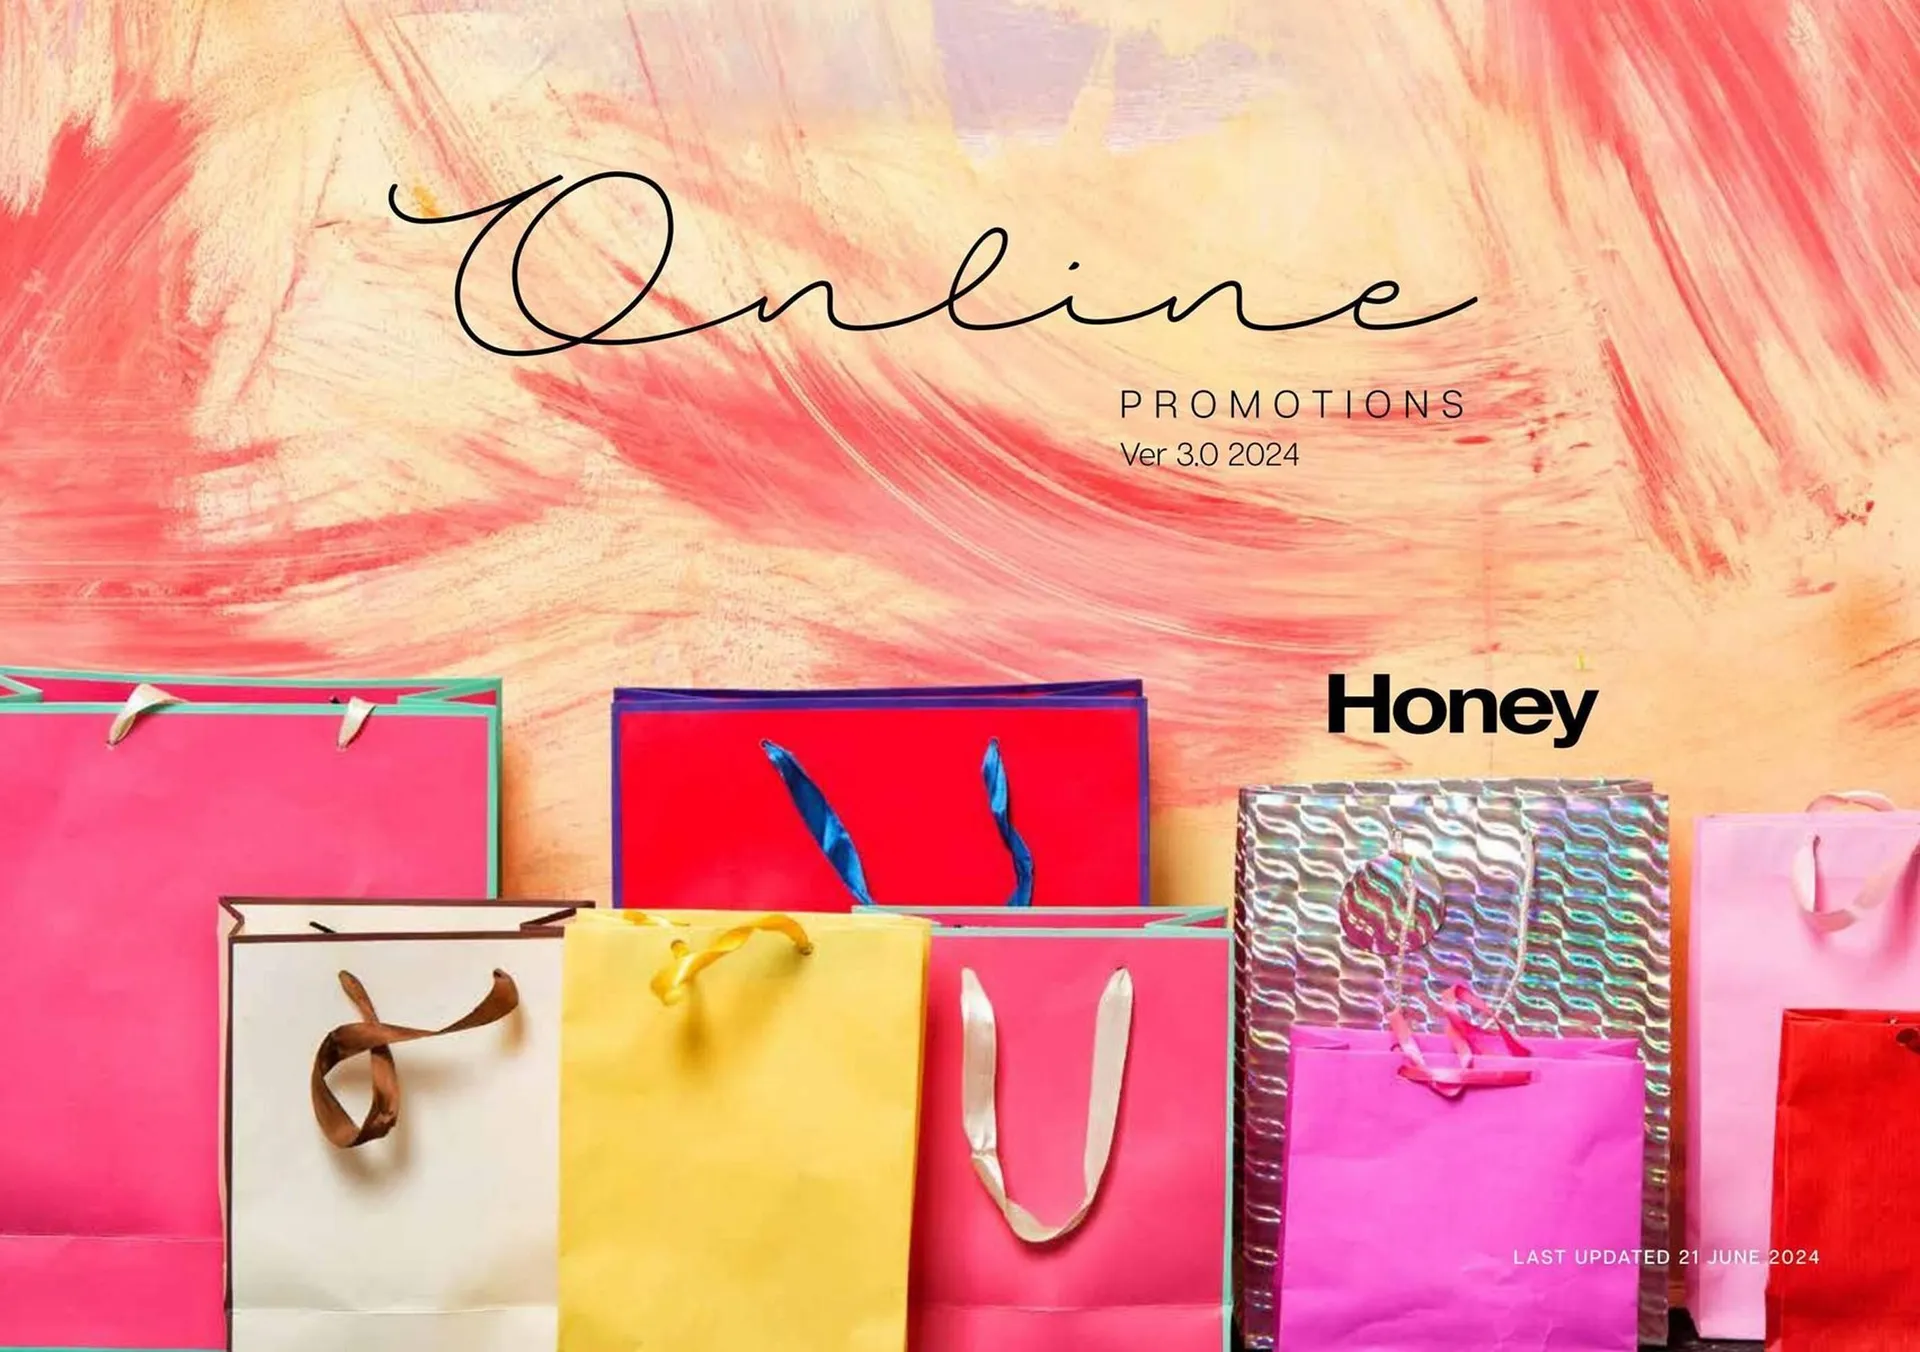 Honey Fashion Accessories catalogue - 1